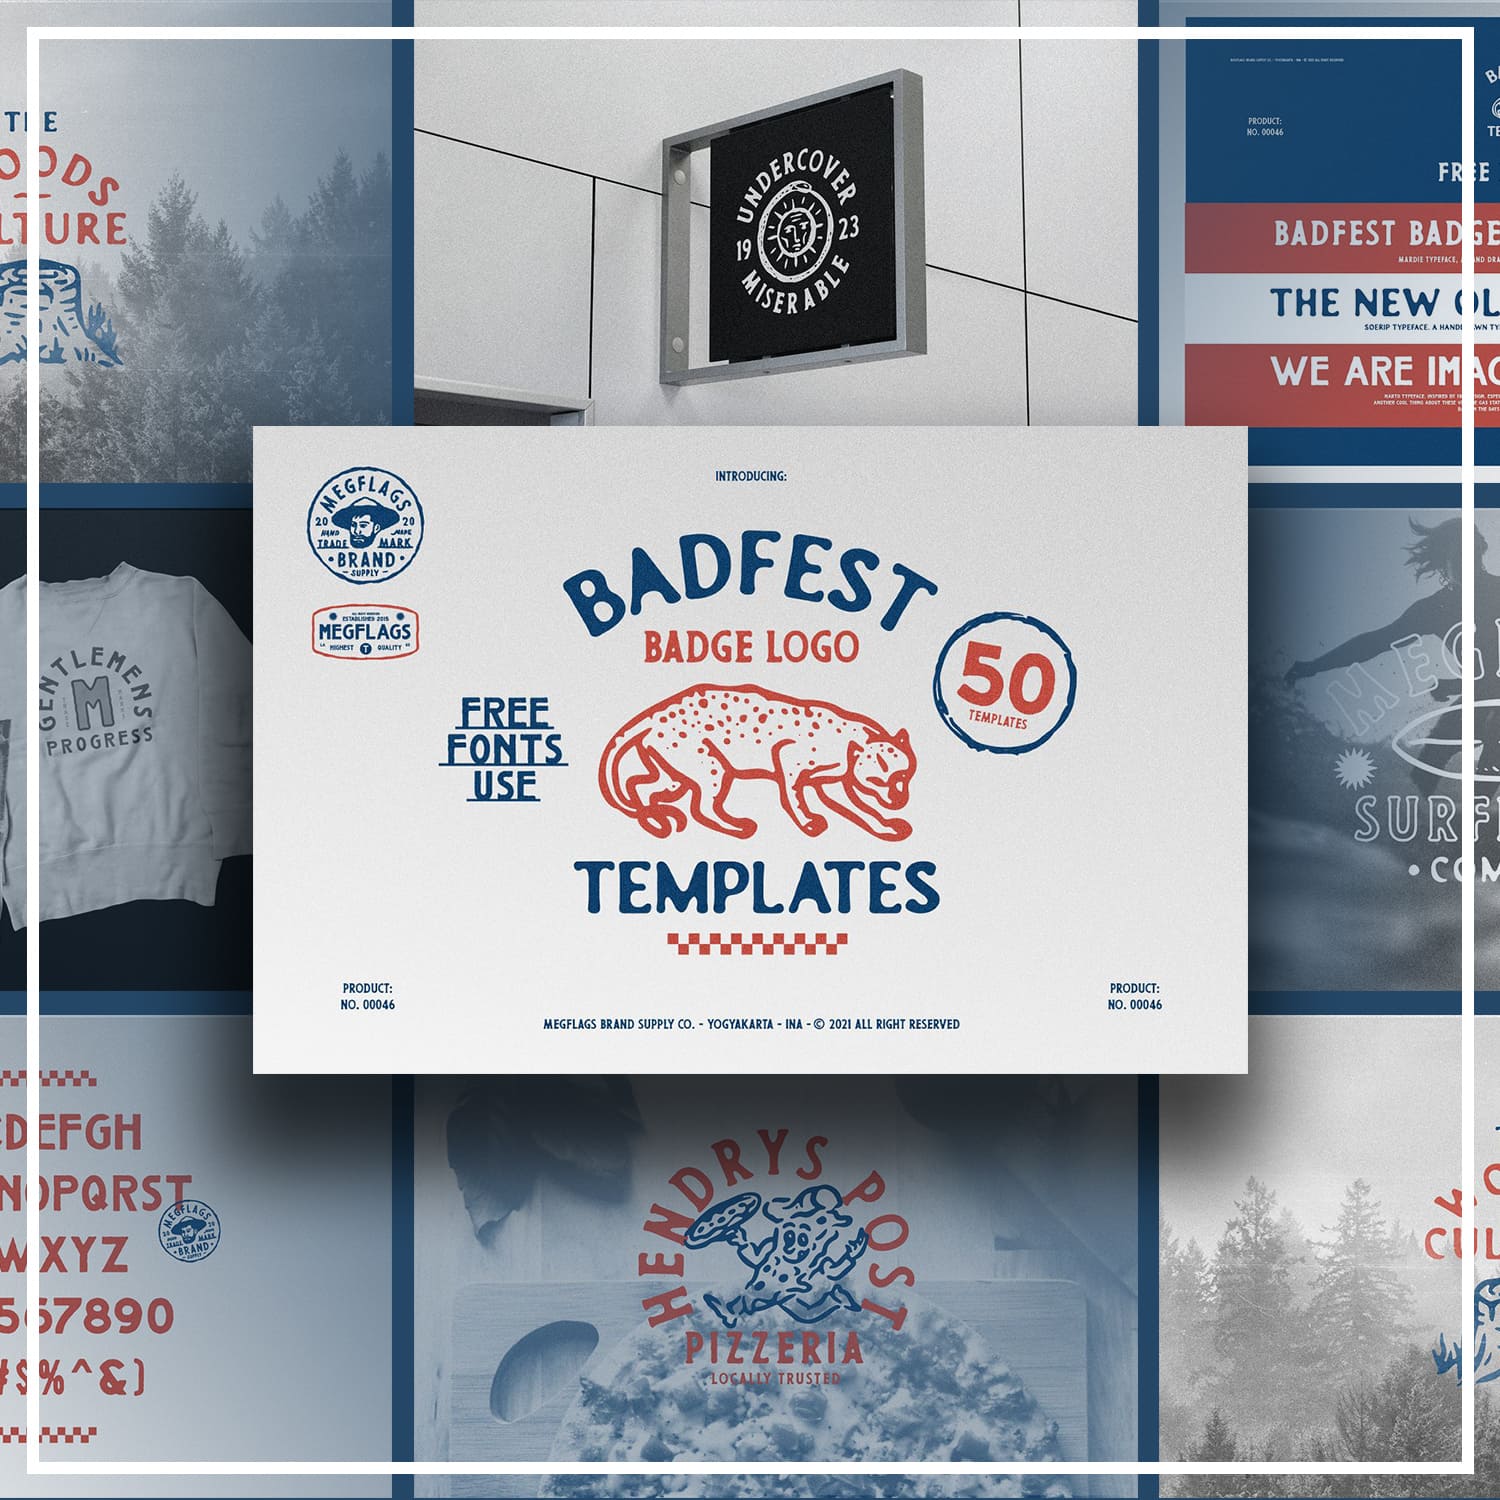 badfest 50 badgelogo templates cover